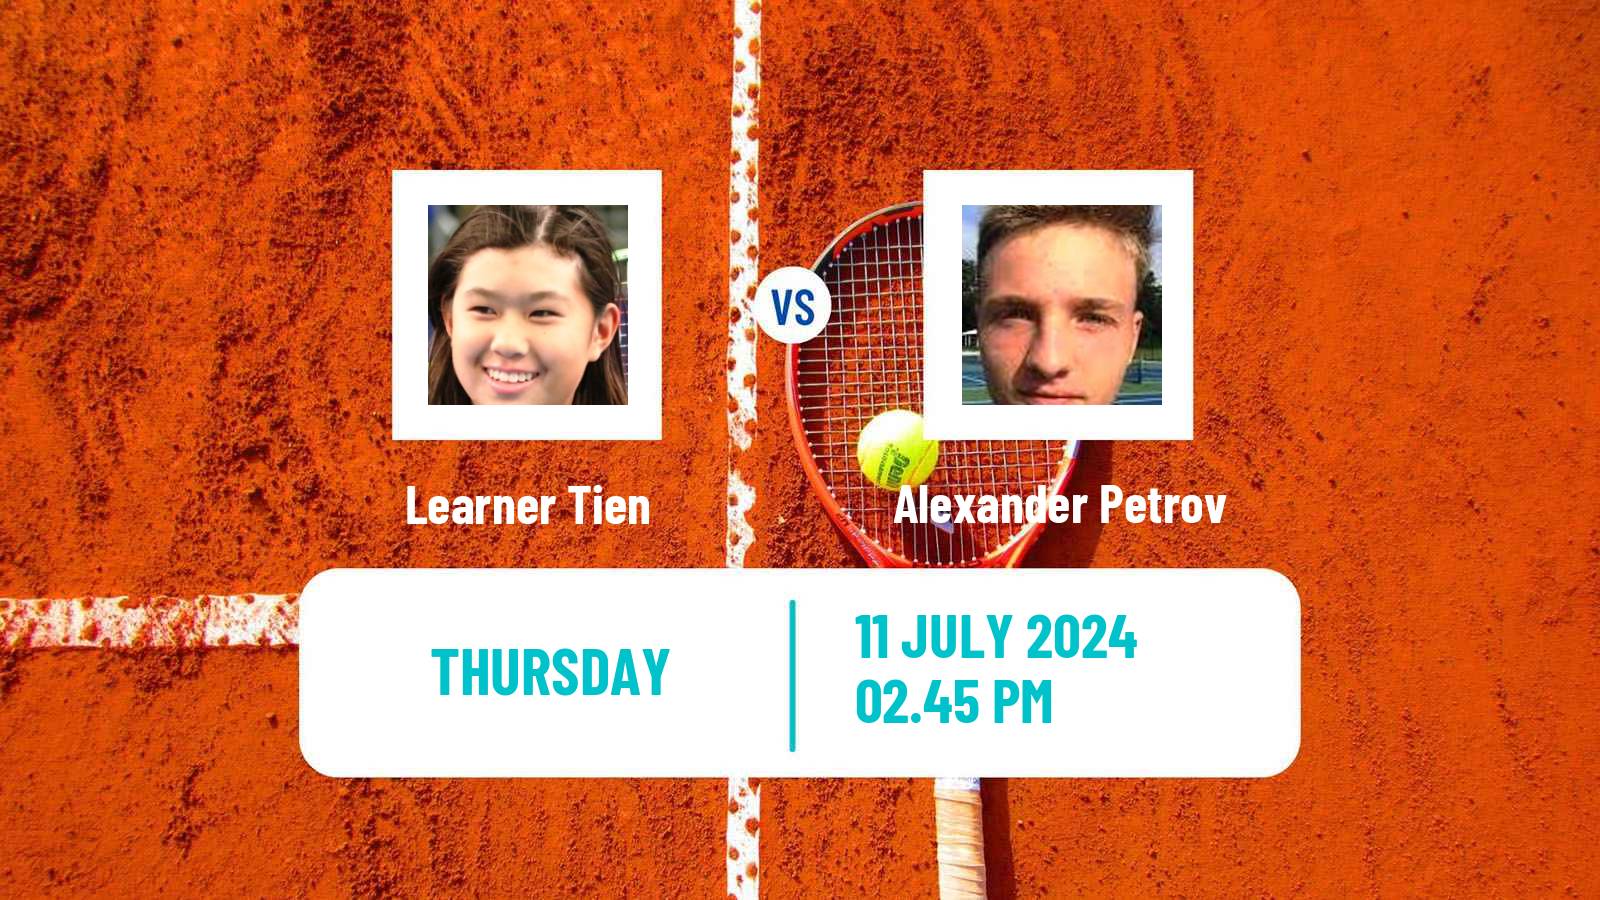 Tennis ITF M15 Lakewood Ca 2 Men Learner Tien - Alexander Petrov